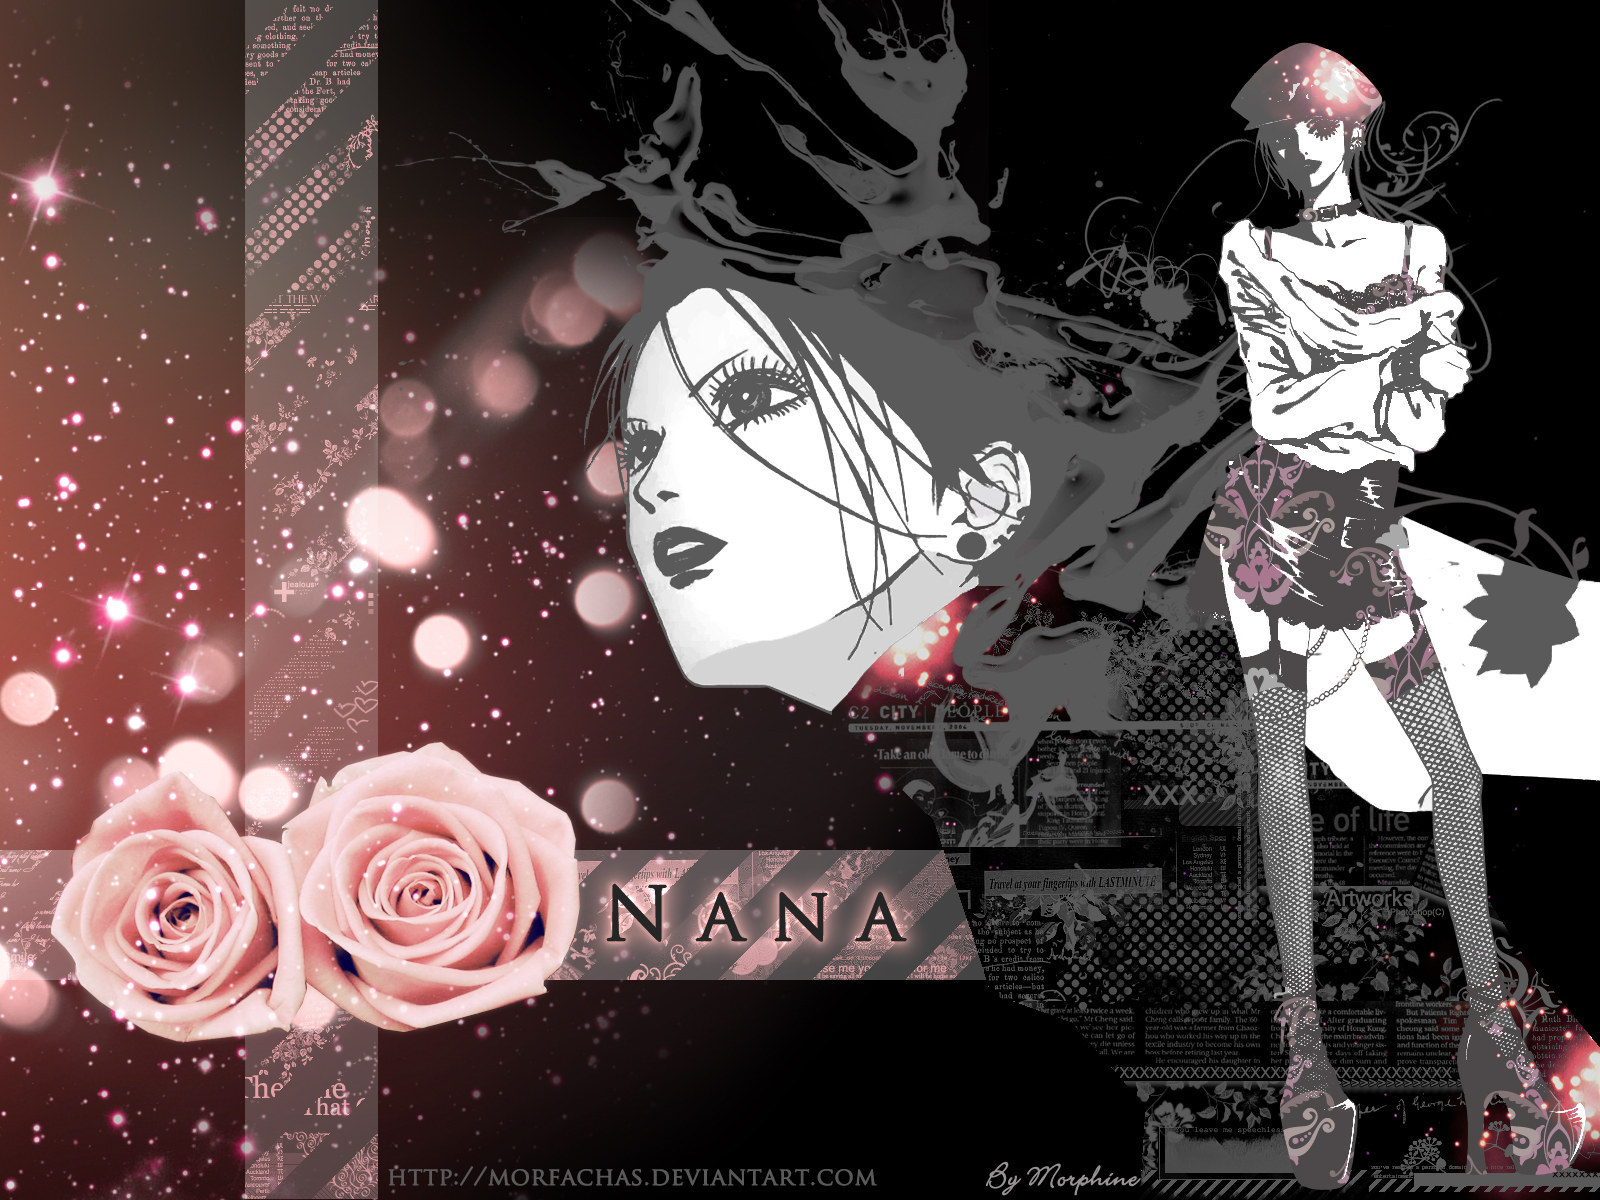 Nana - NANA Wallpaper (25925763) - Fanpop